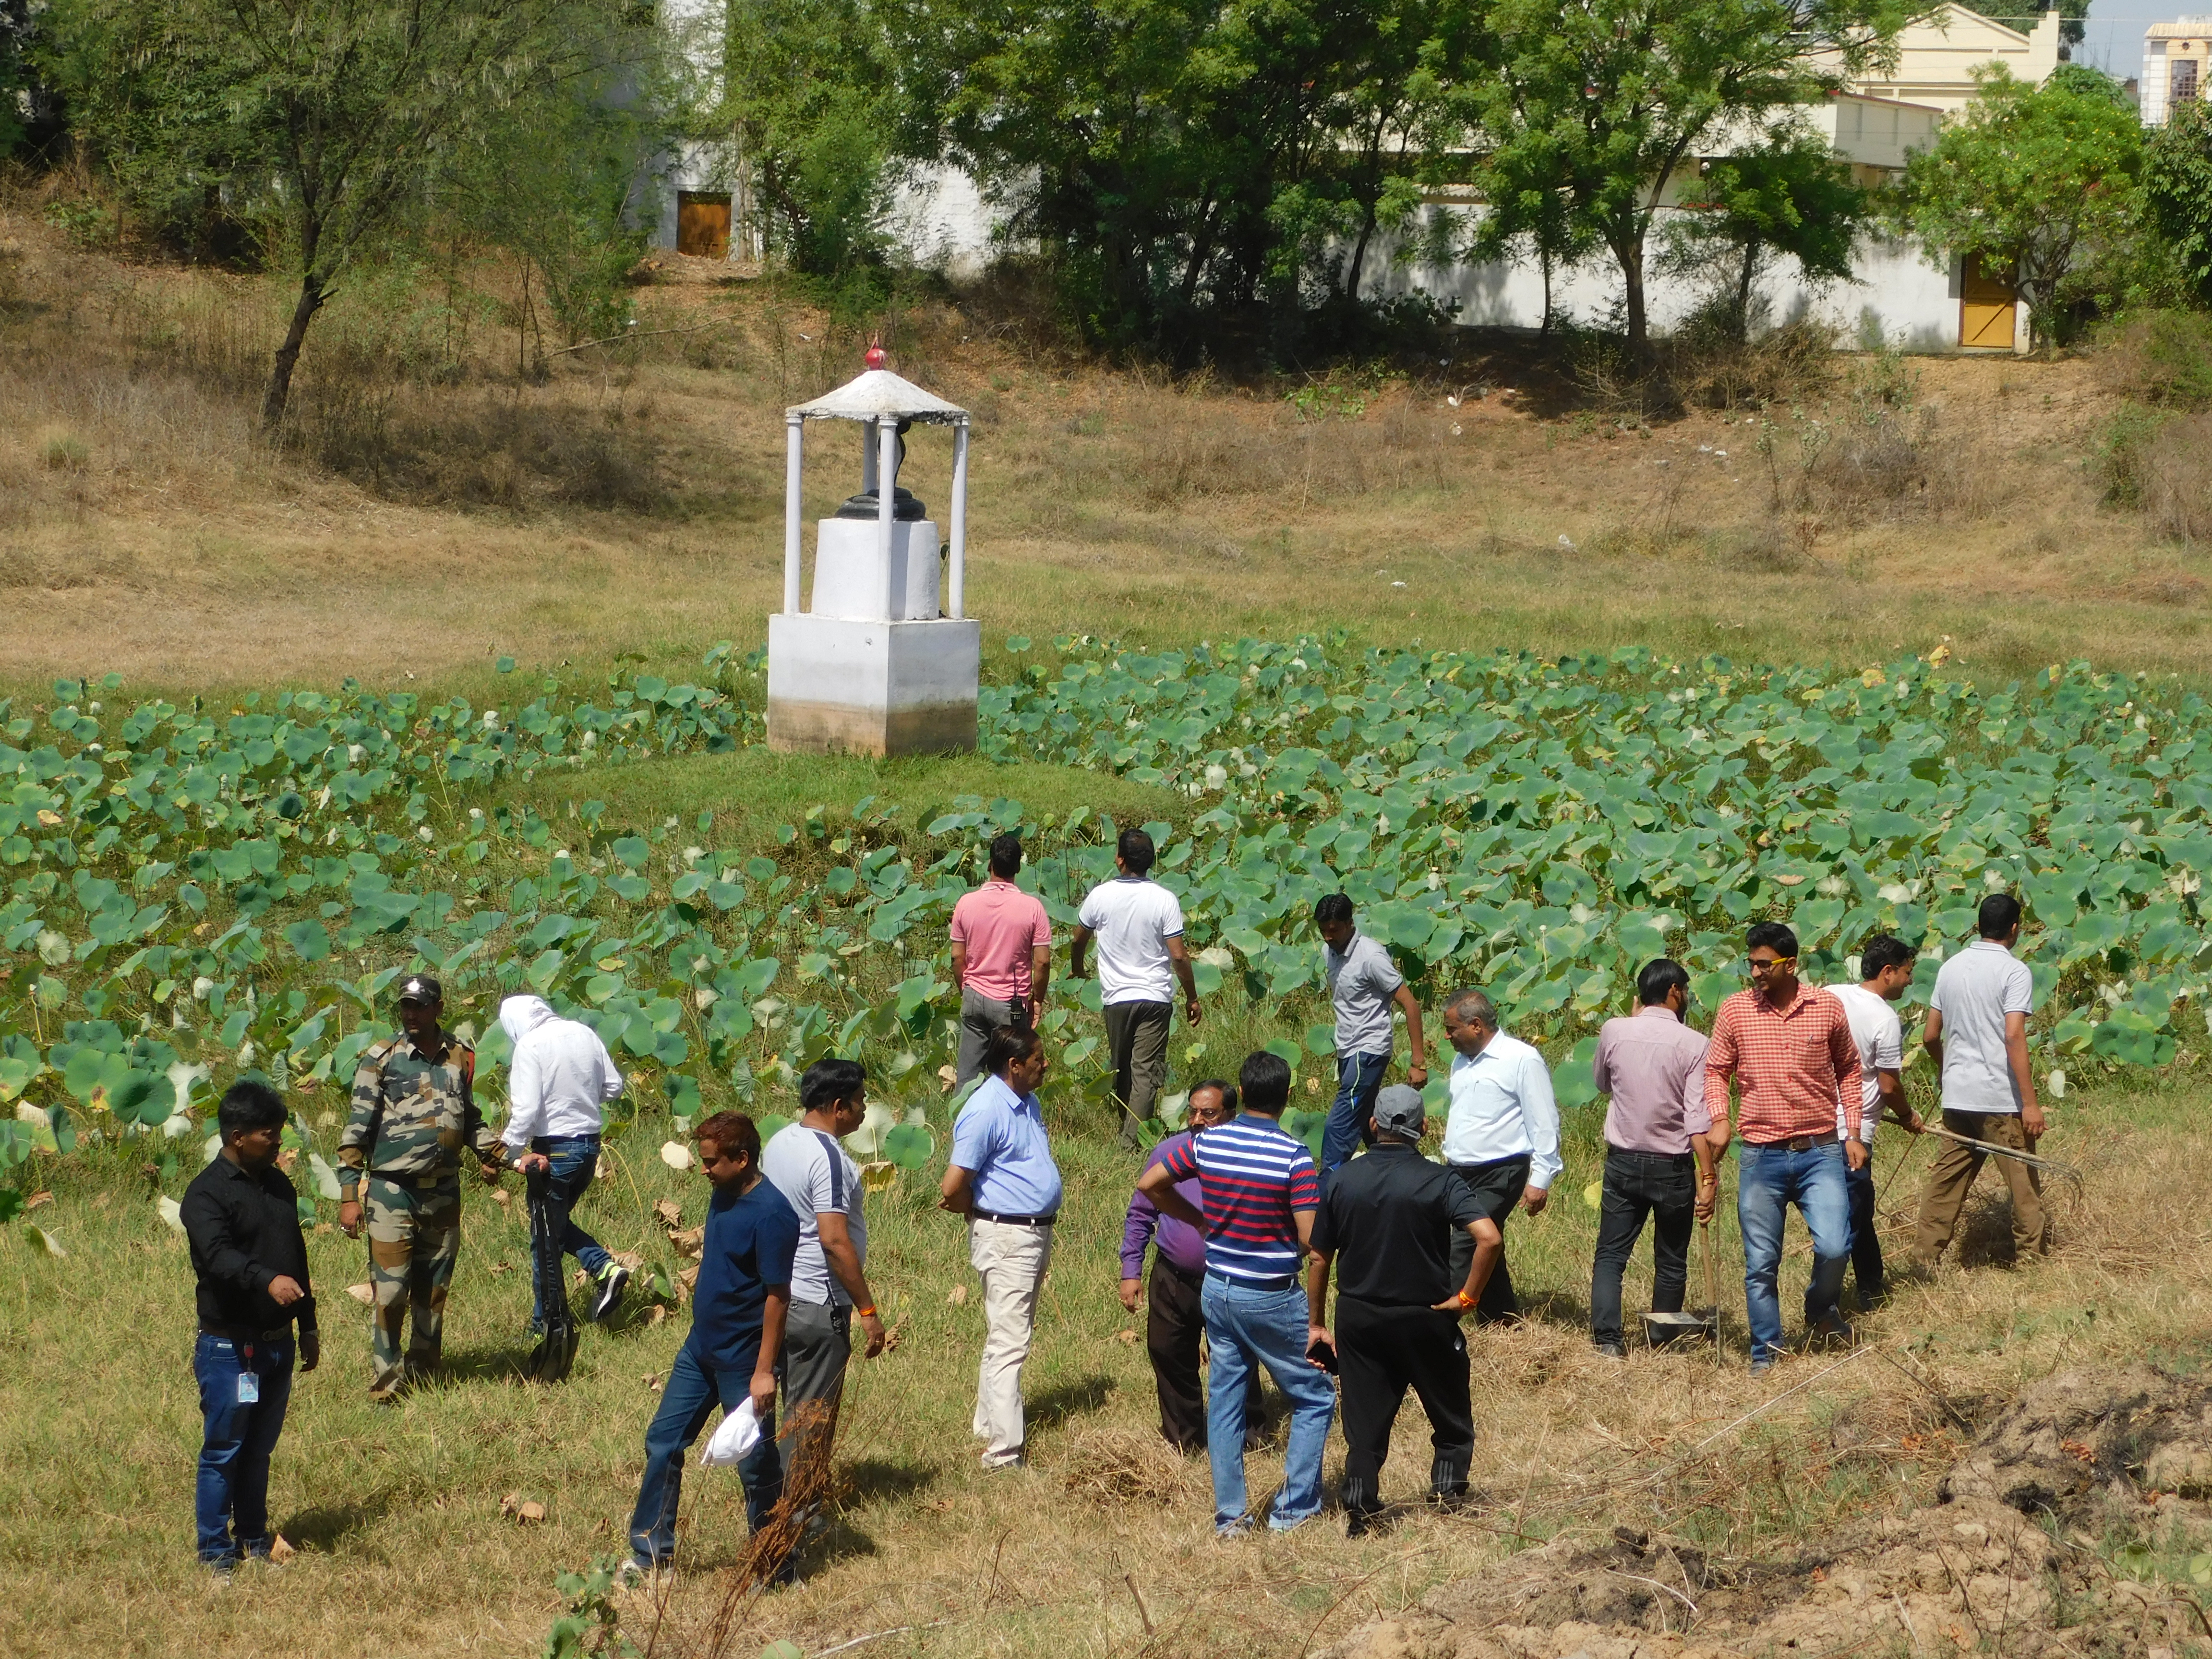 Bhagirathi effort of protection of ponds started